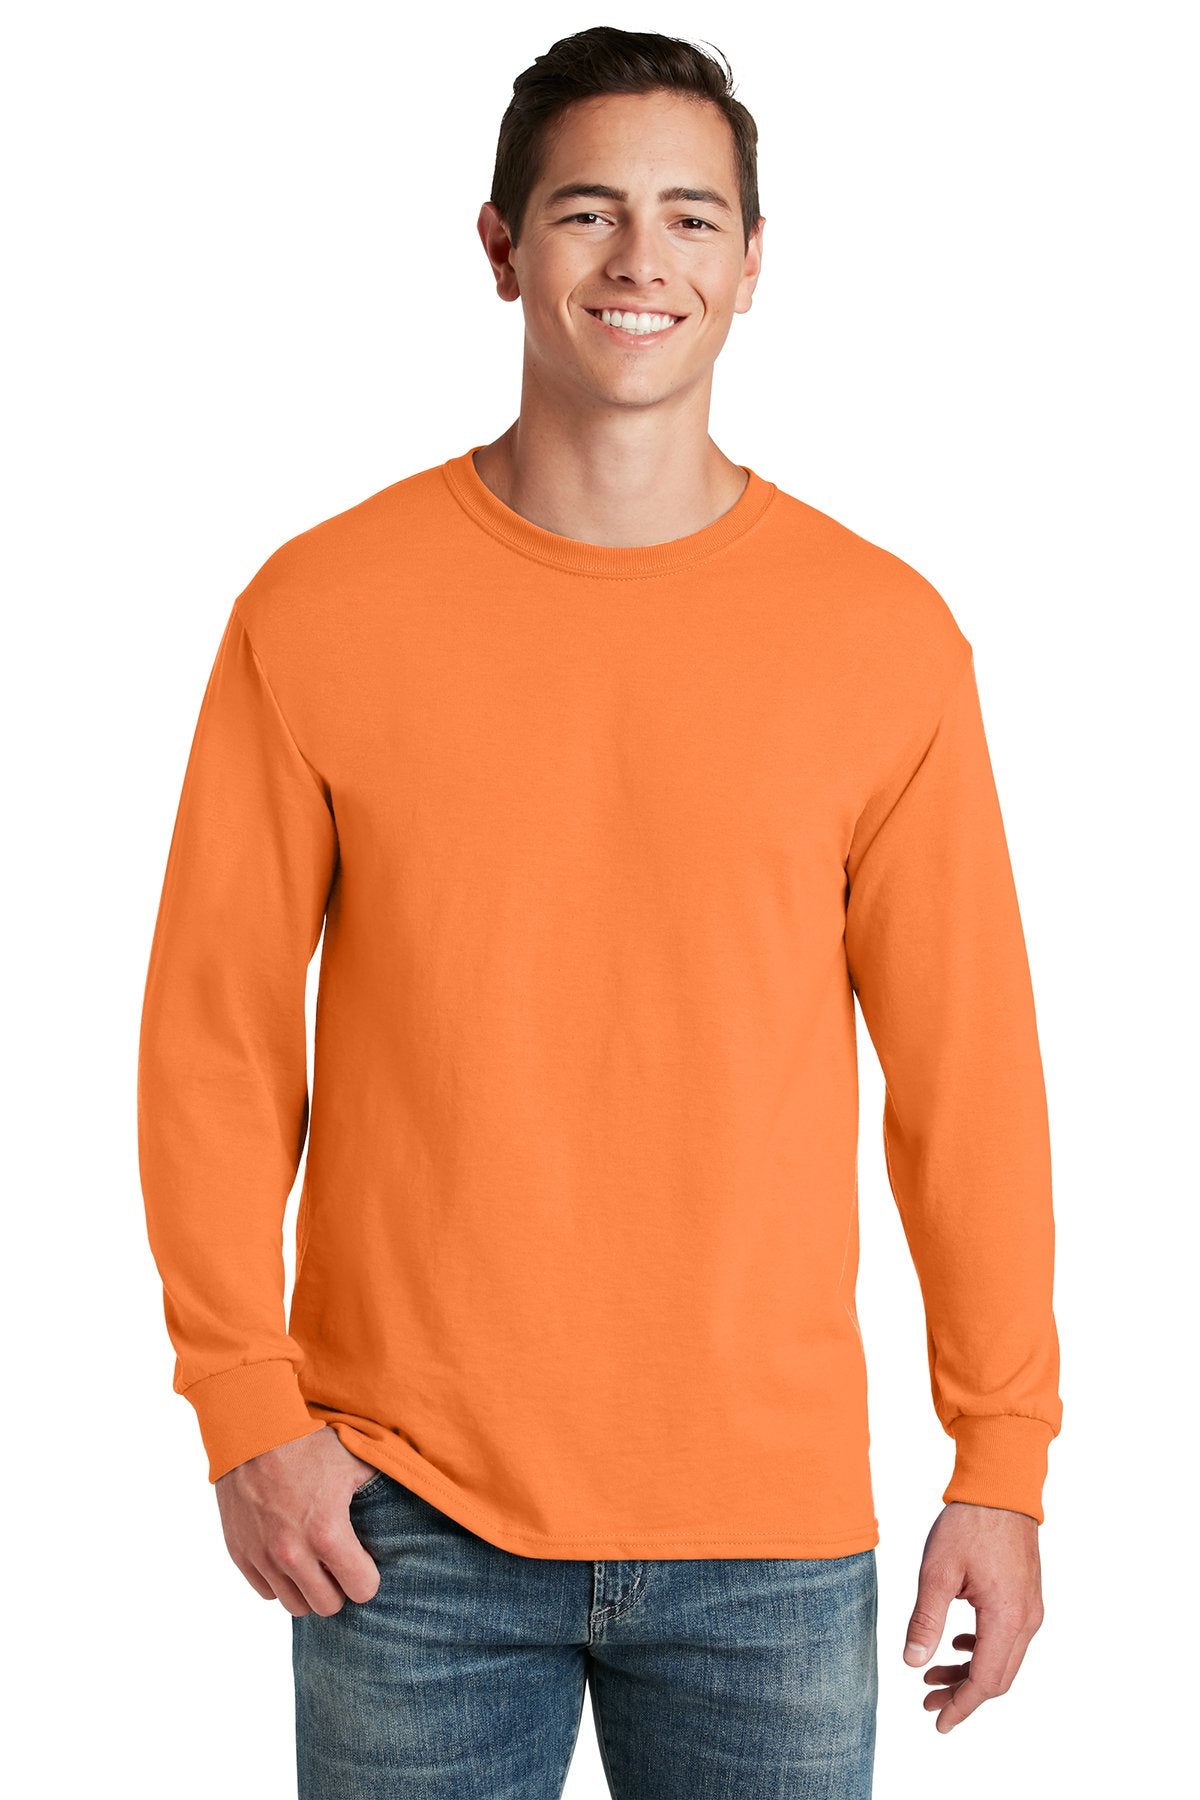 jerzees dri-power 50/50 cotton/poly long sleeve t-shirt 29ls safety orange